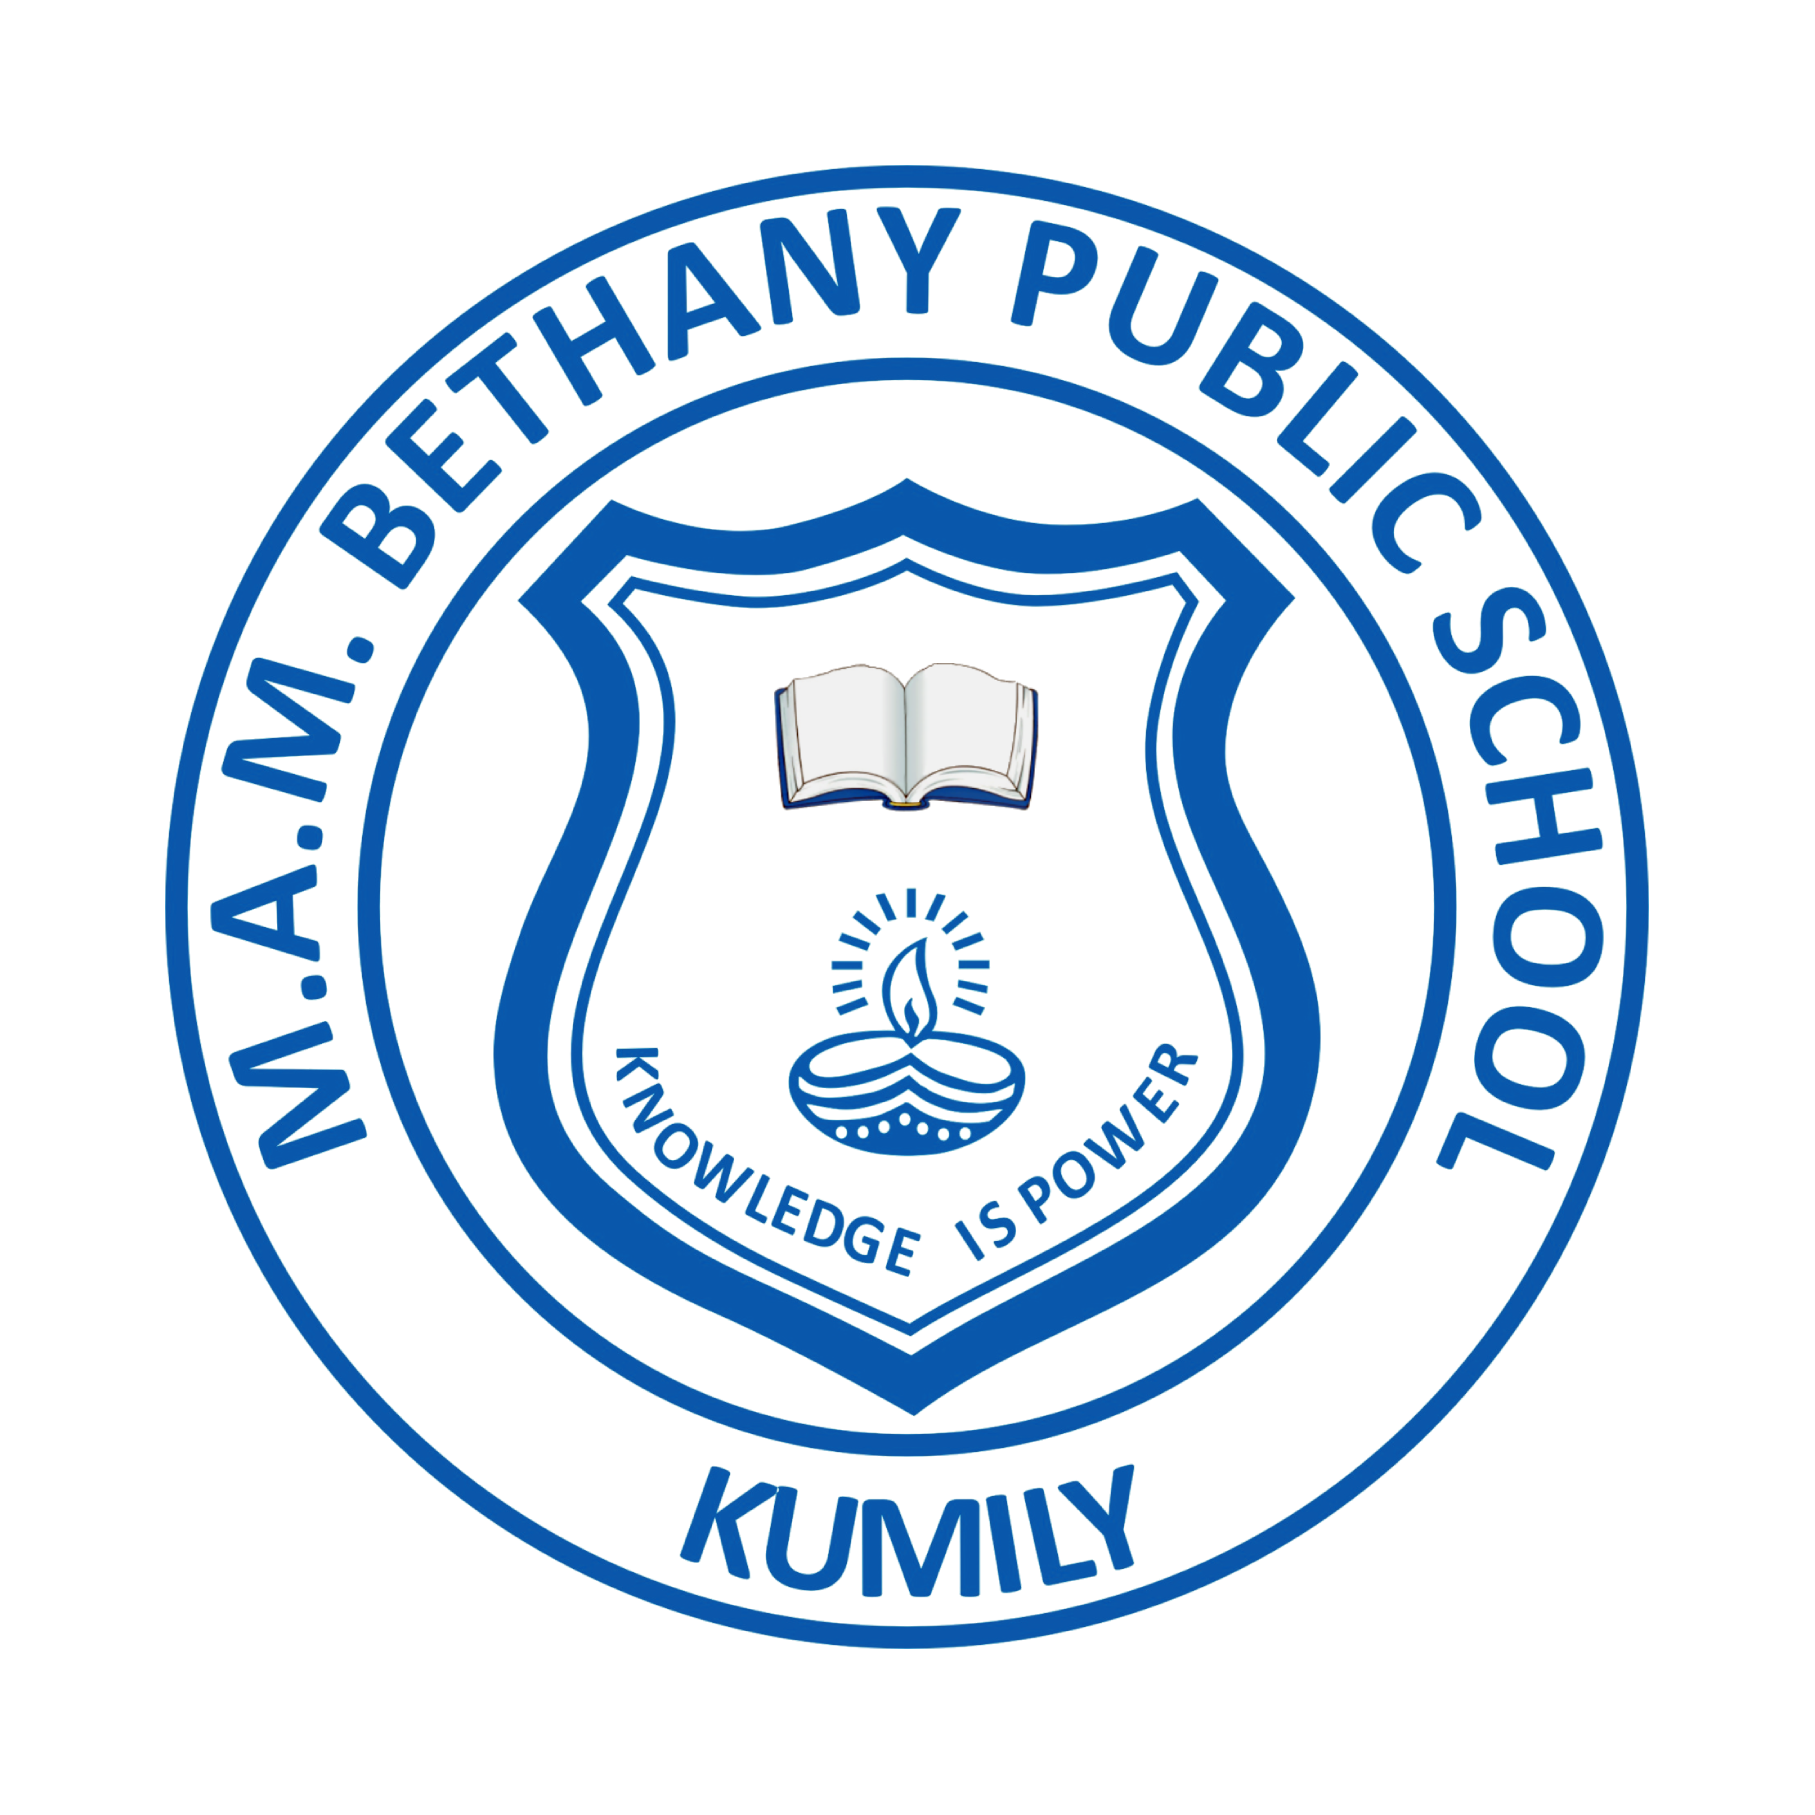 MAM Bethany Public School Logo